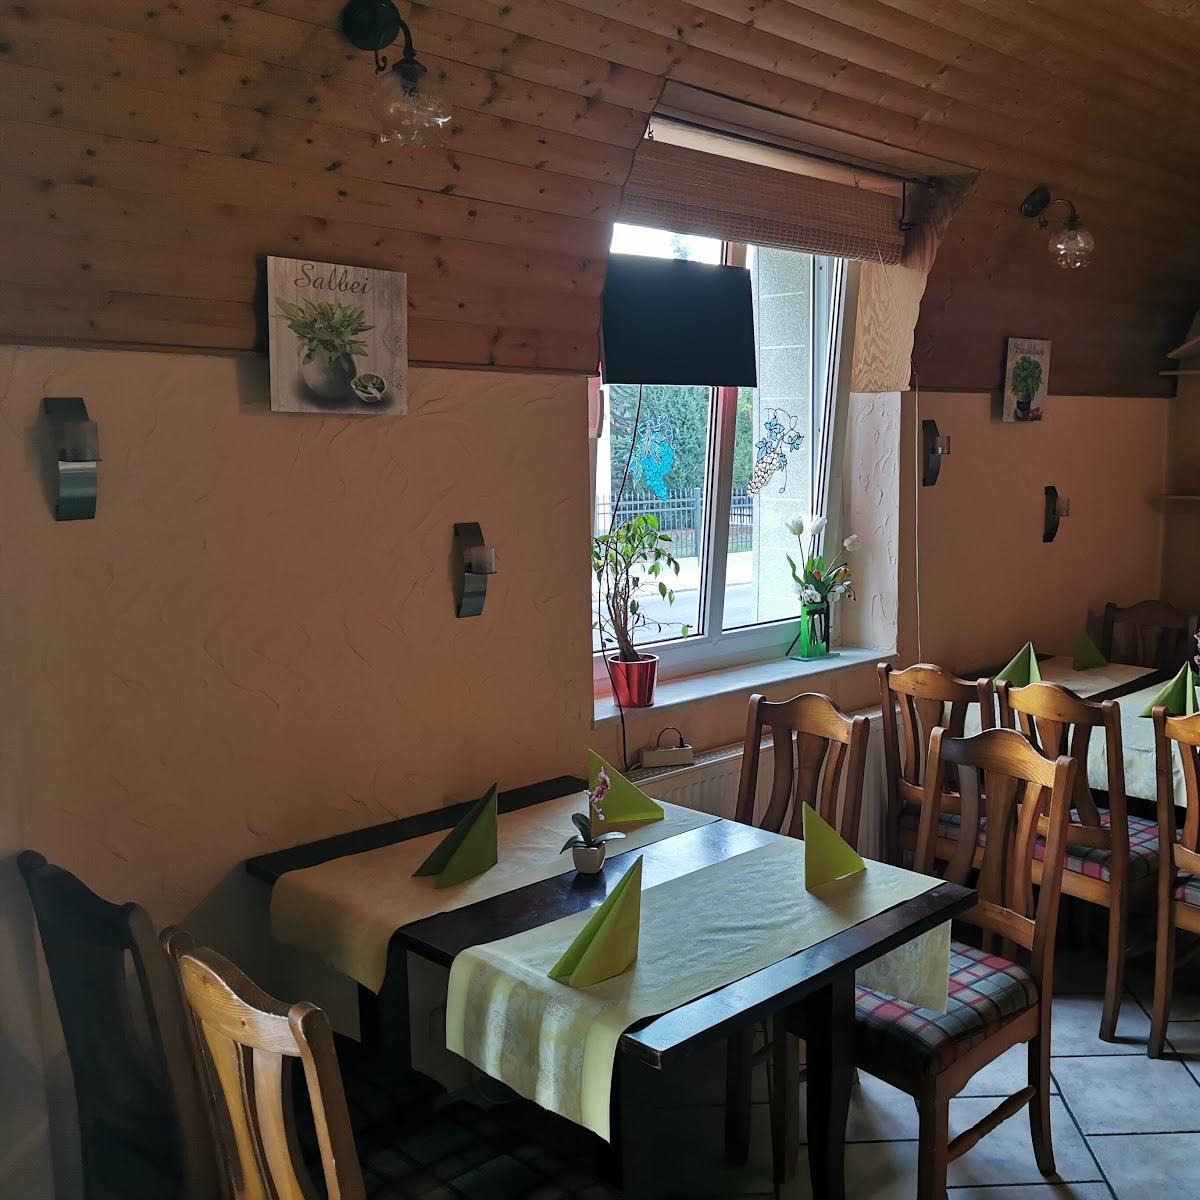 Restaurant "Avanti" in Lauta